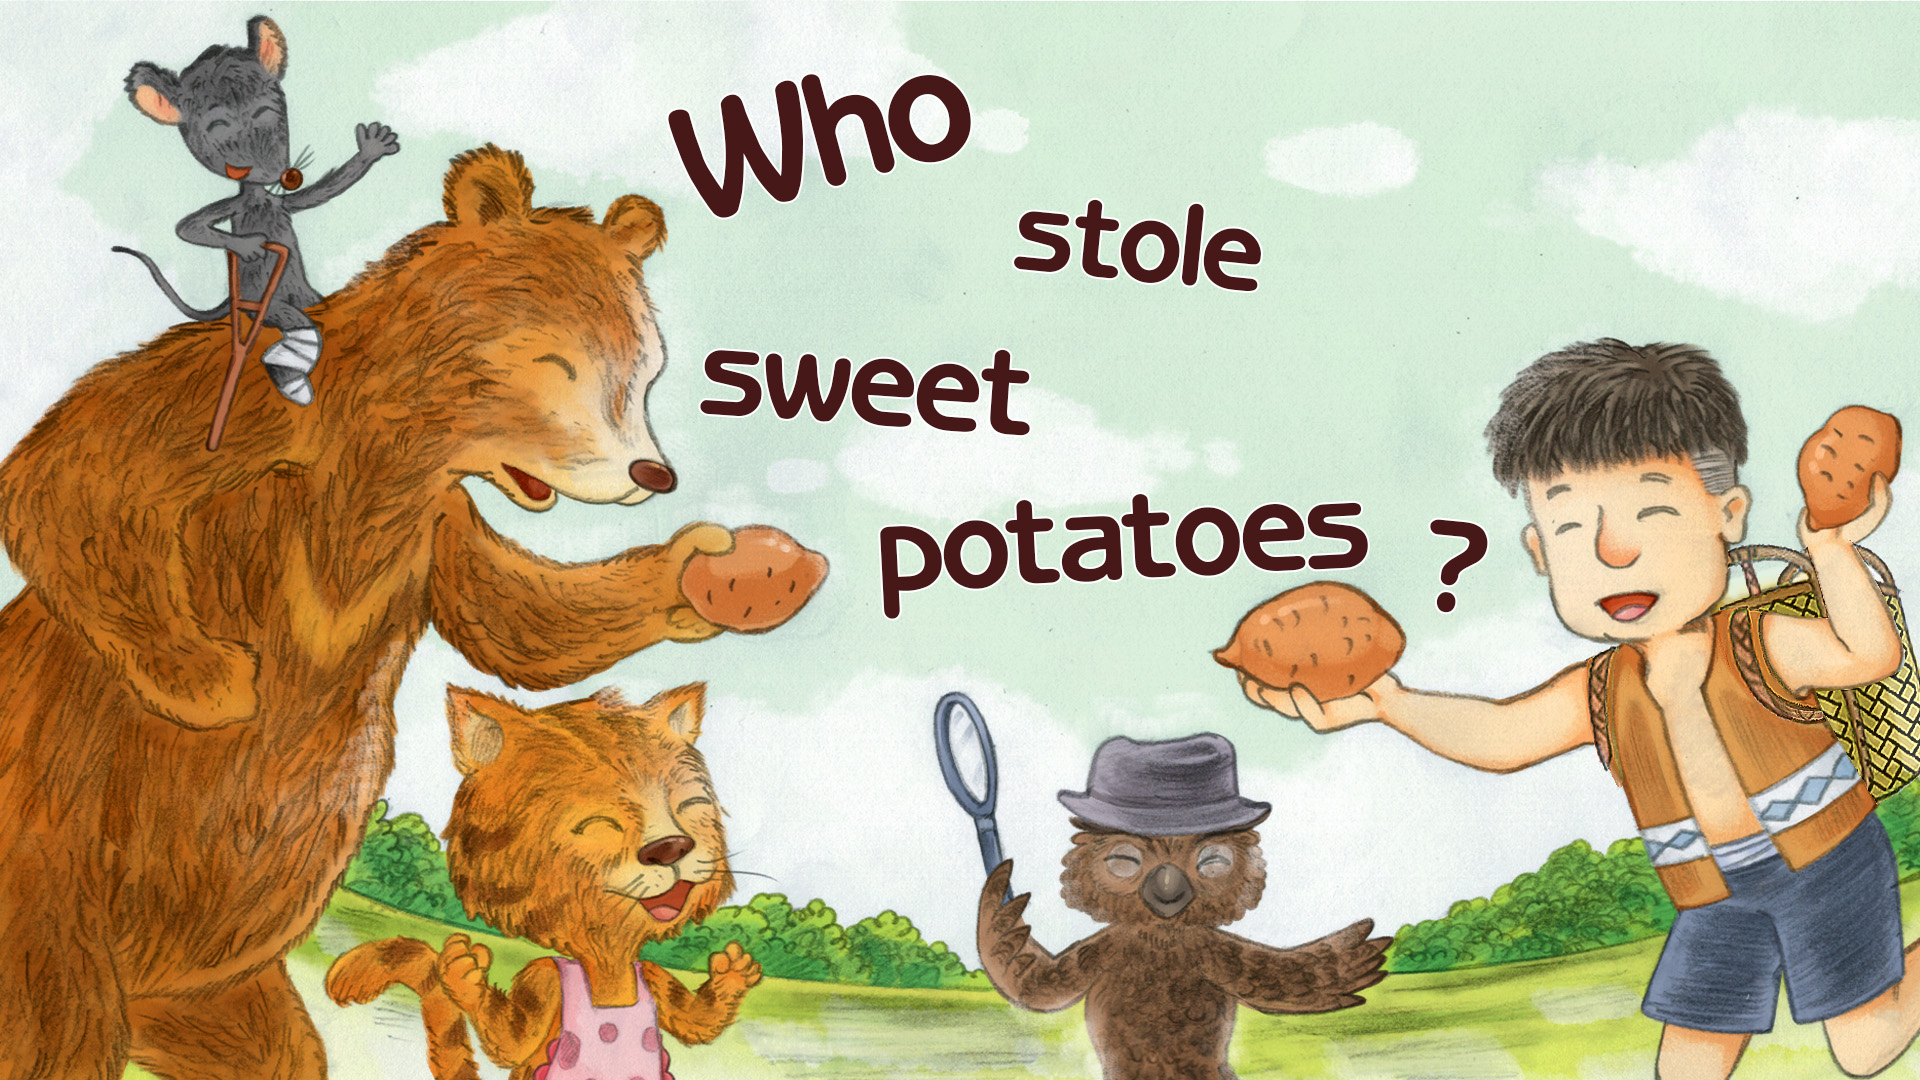 Who stole sweet potatoes?